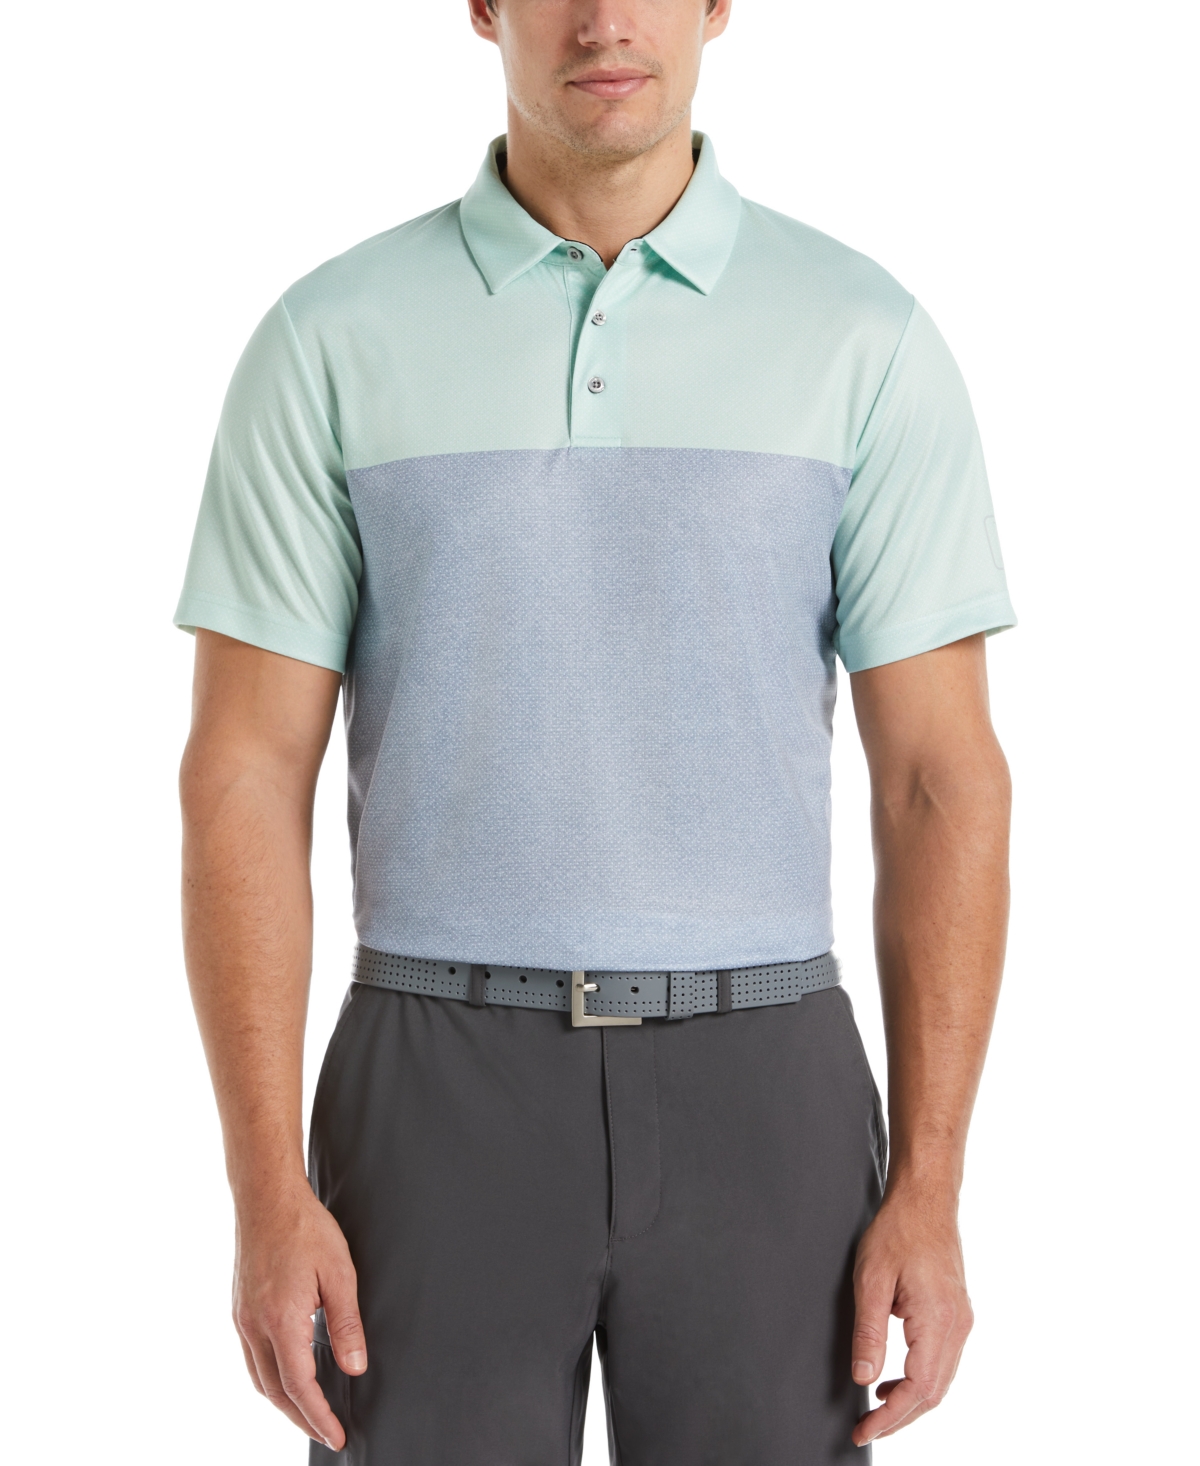 Men's Airflux Birdseye Block Print Short-Sleeve Golf Polo Shirt - Peacoat/peacoat